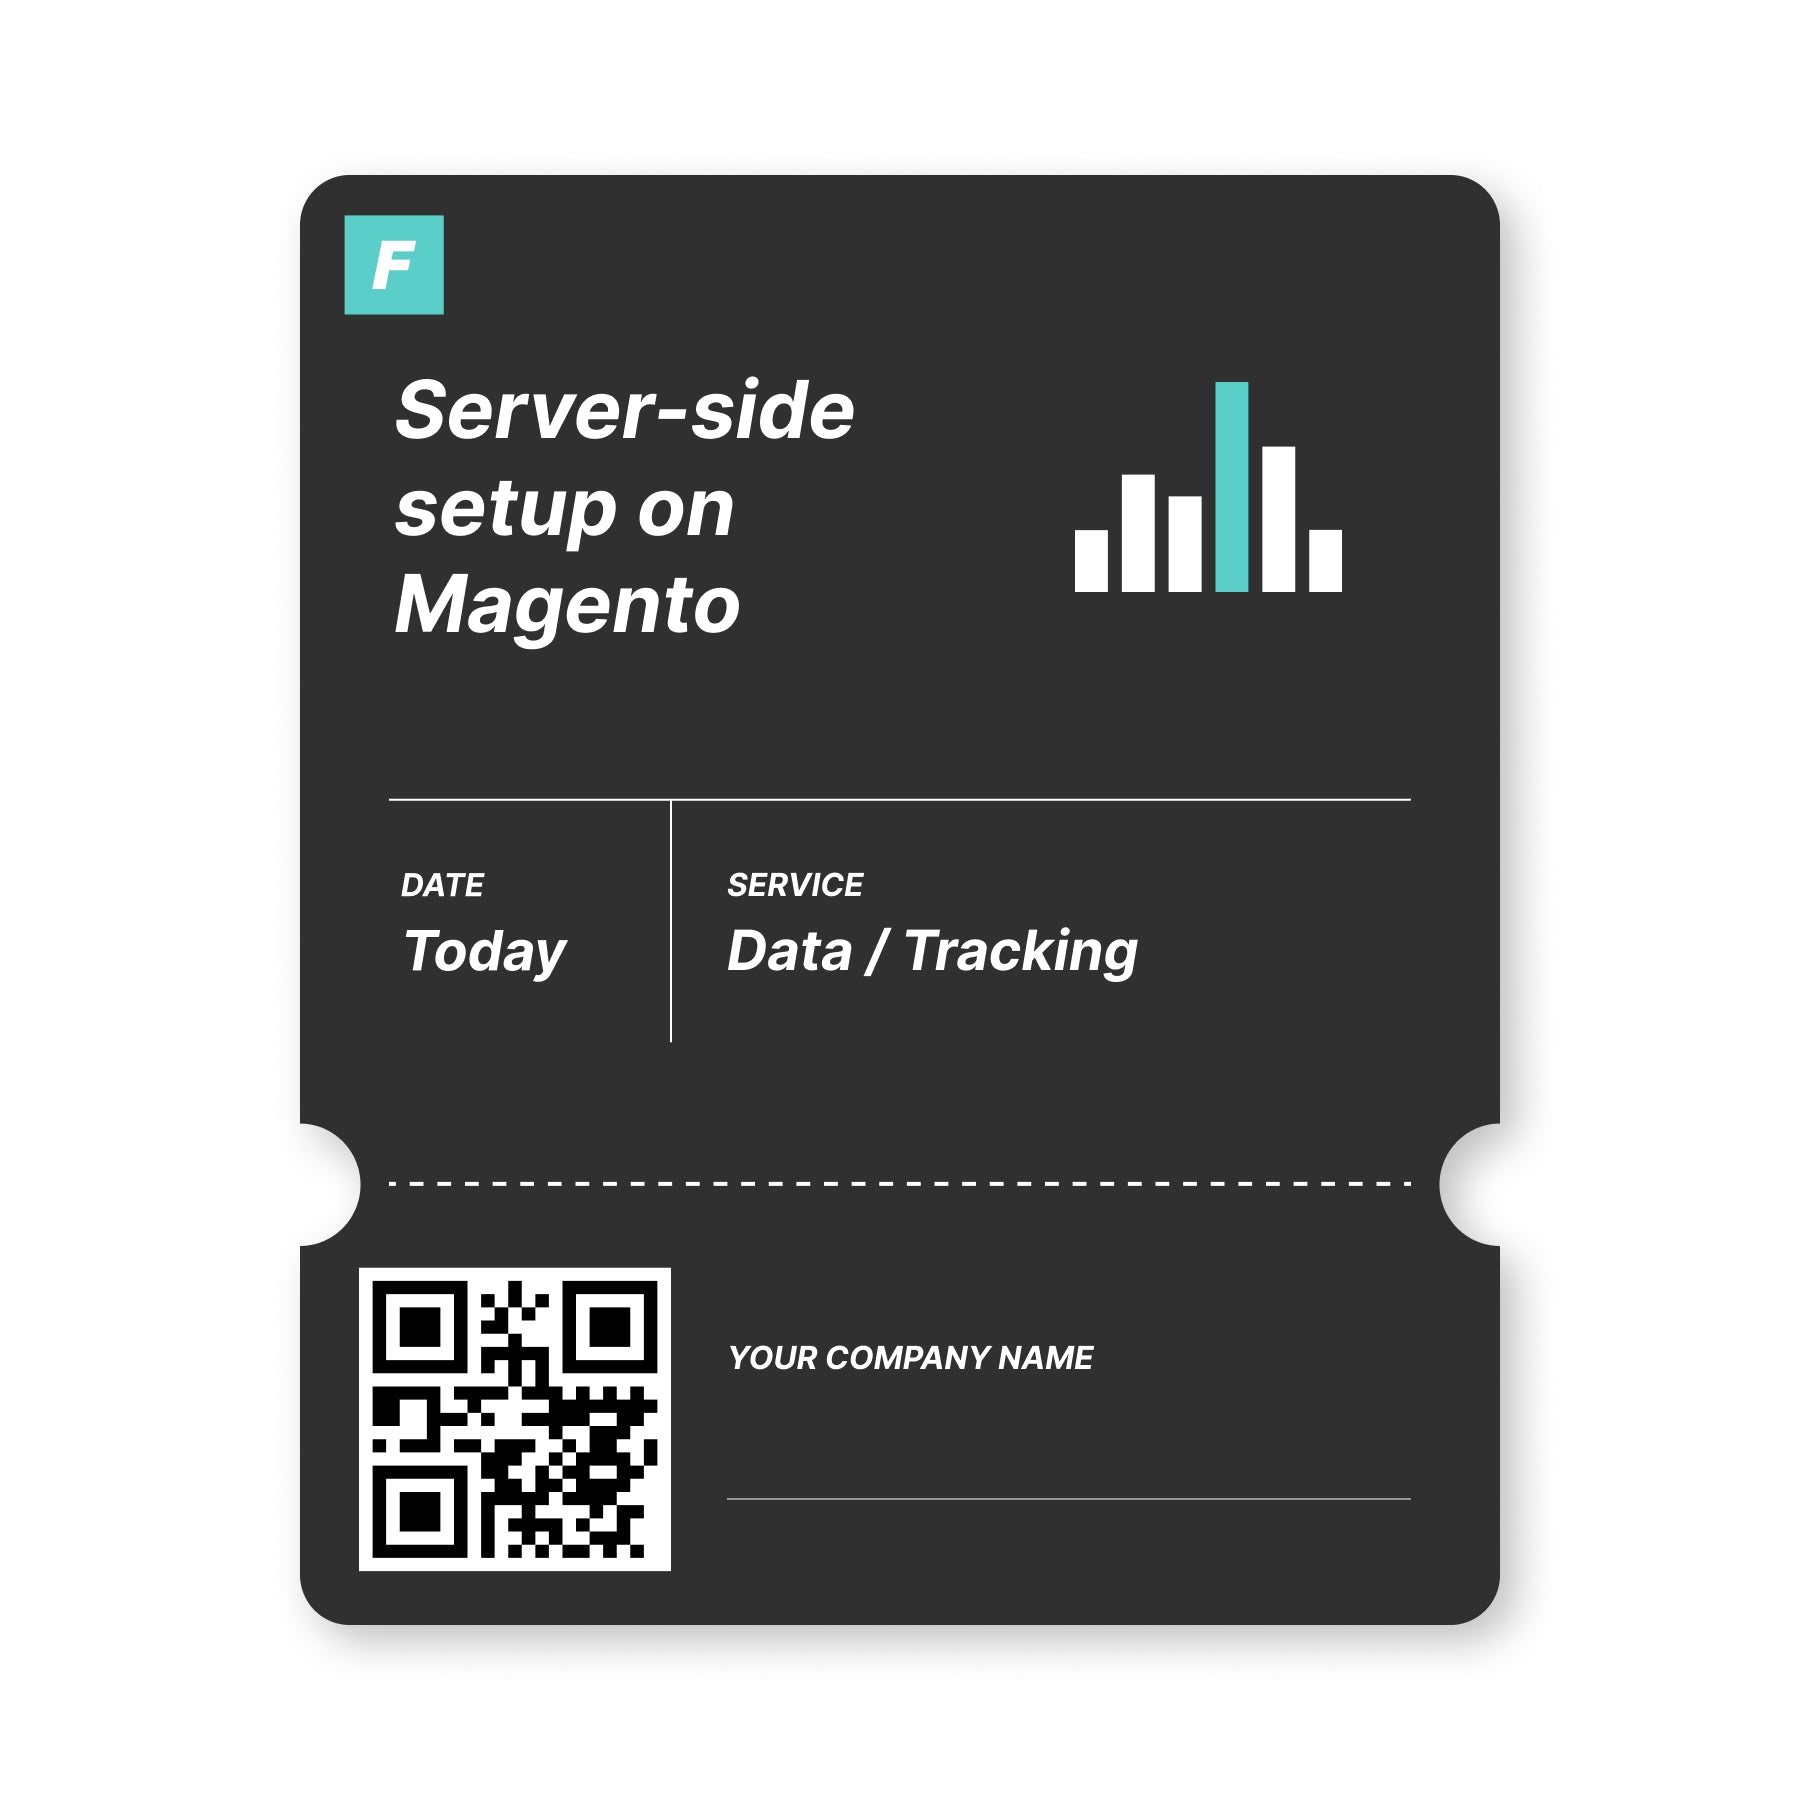 Server-side setup on Magento